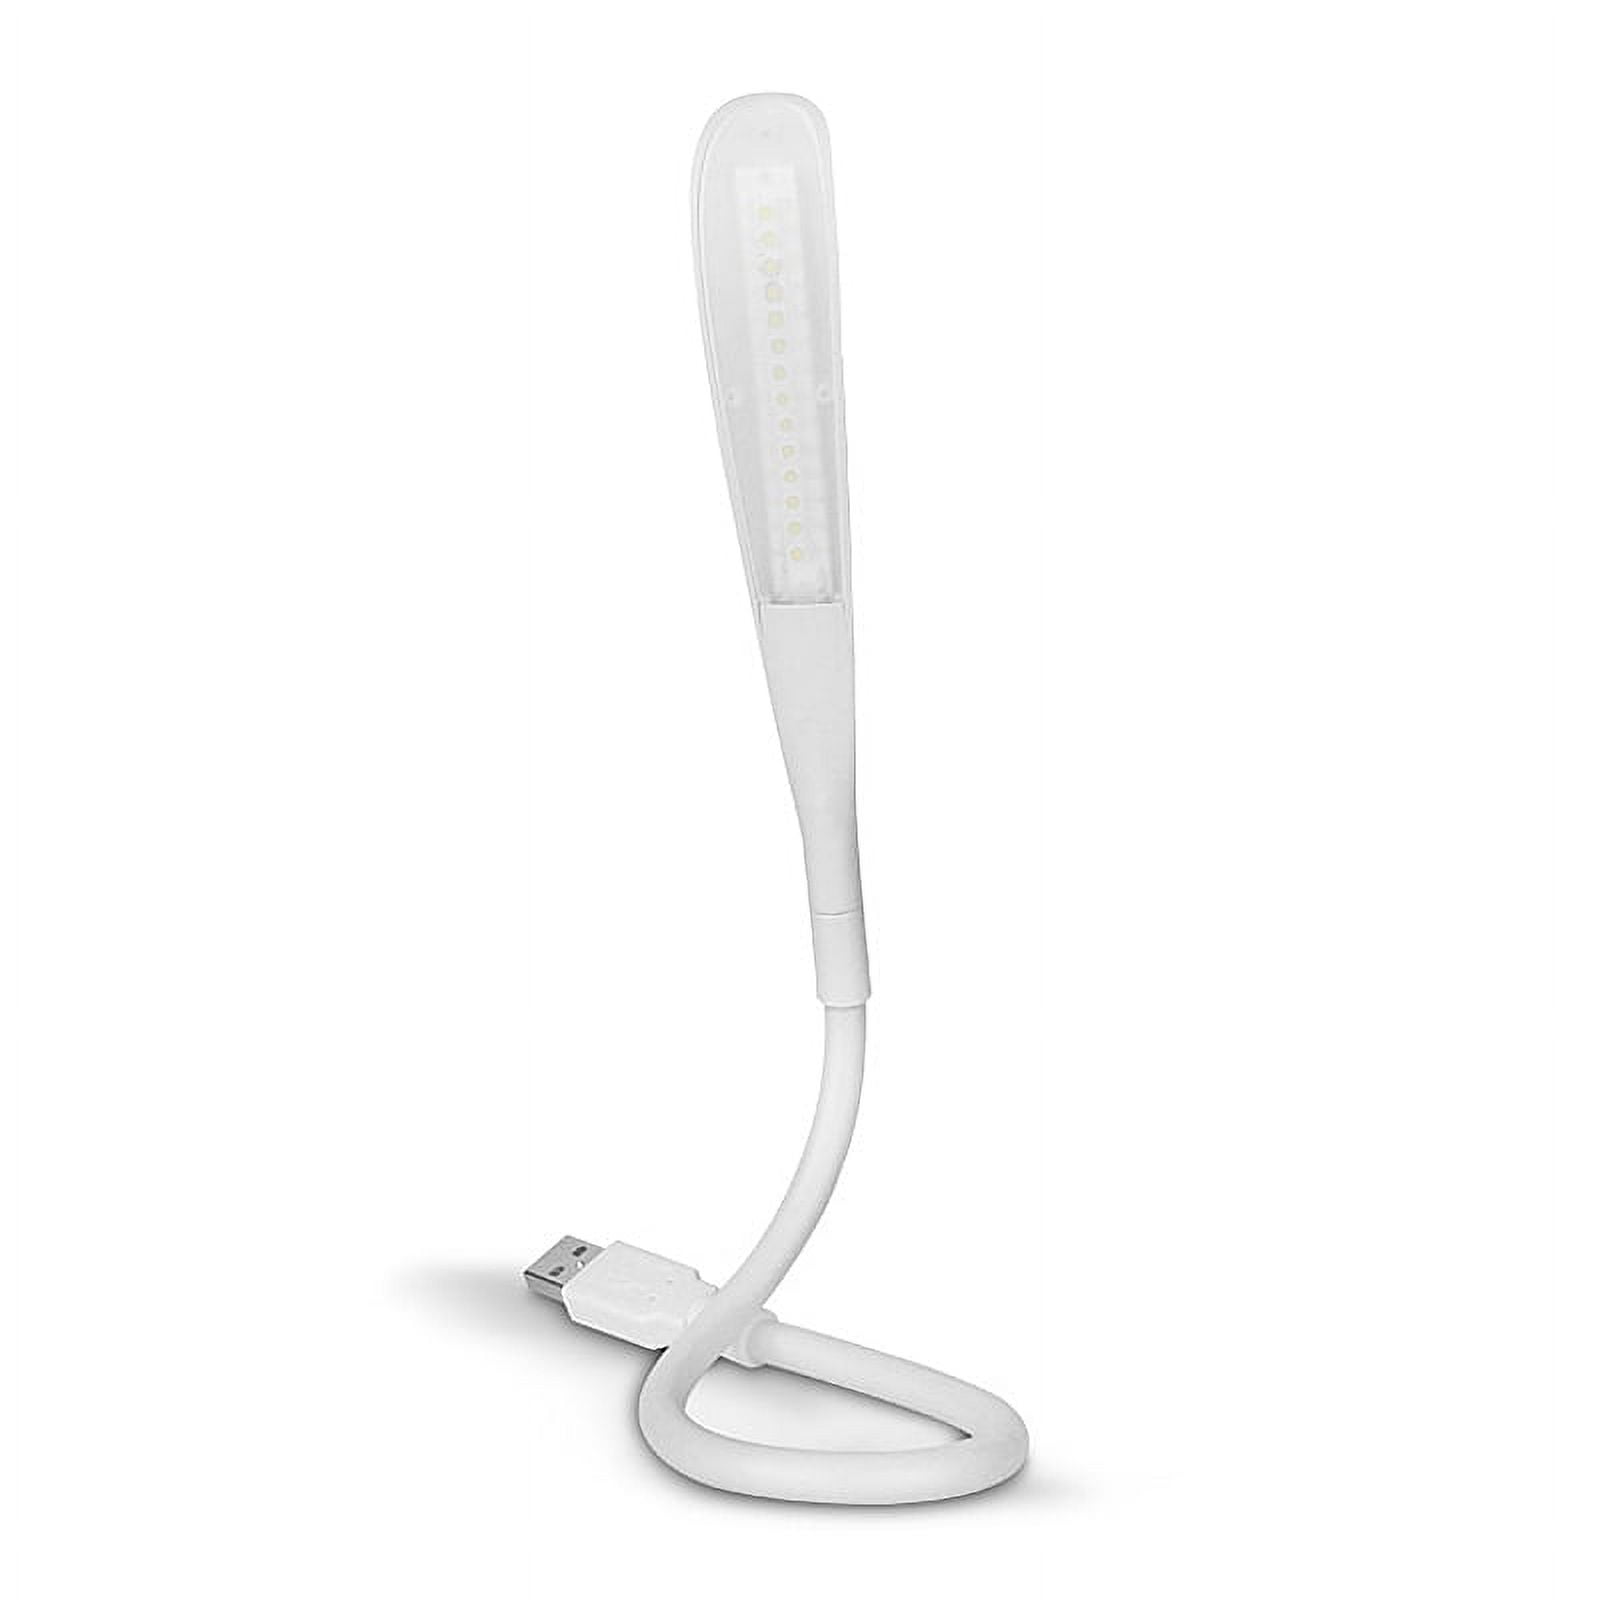 USB LED Light (Flexible & Ultra Bright) (Free Gift)